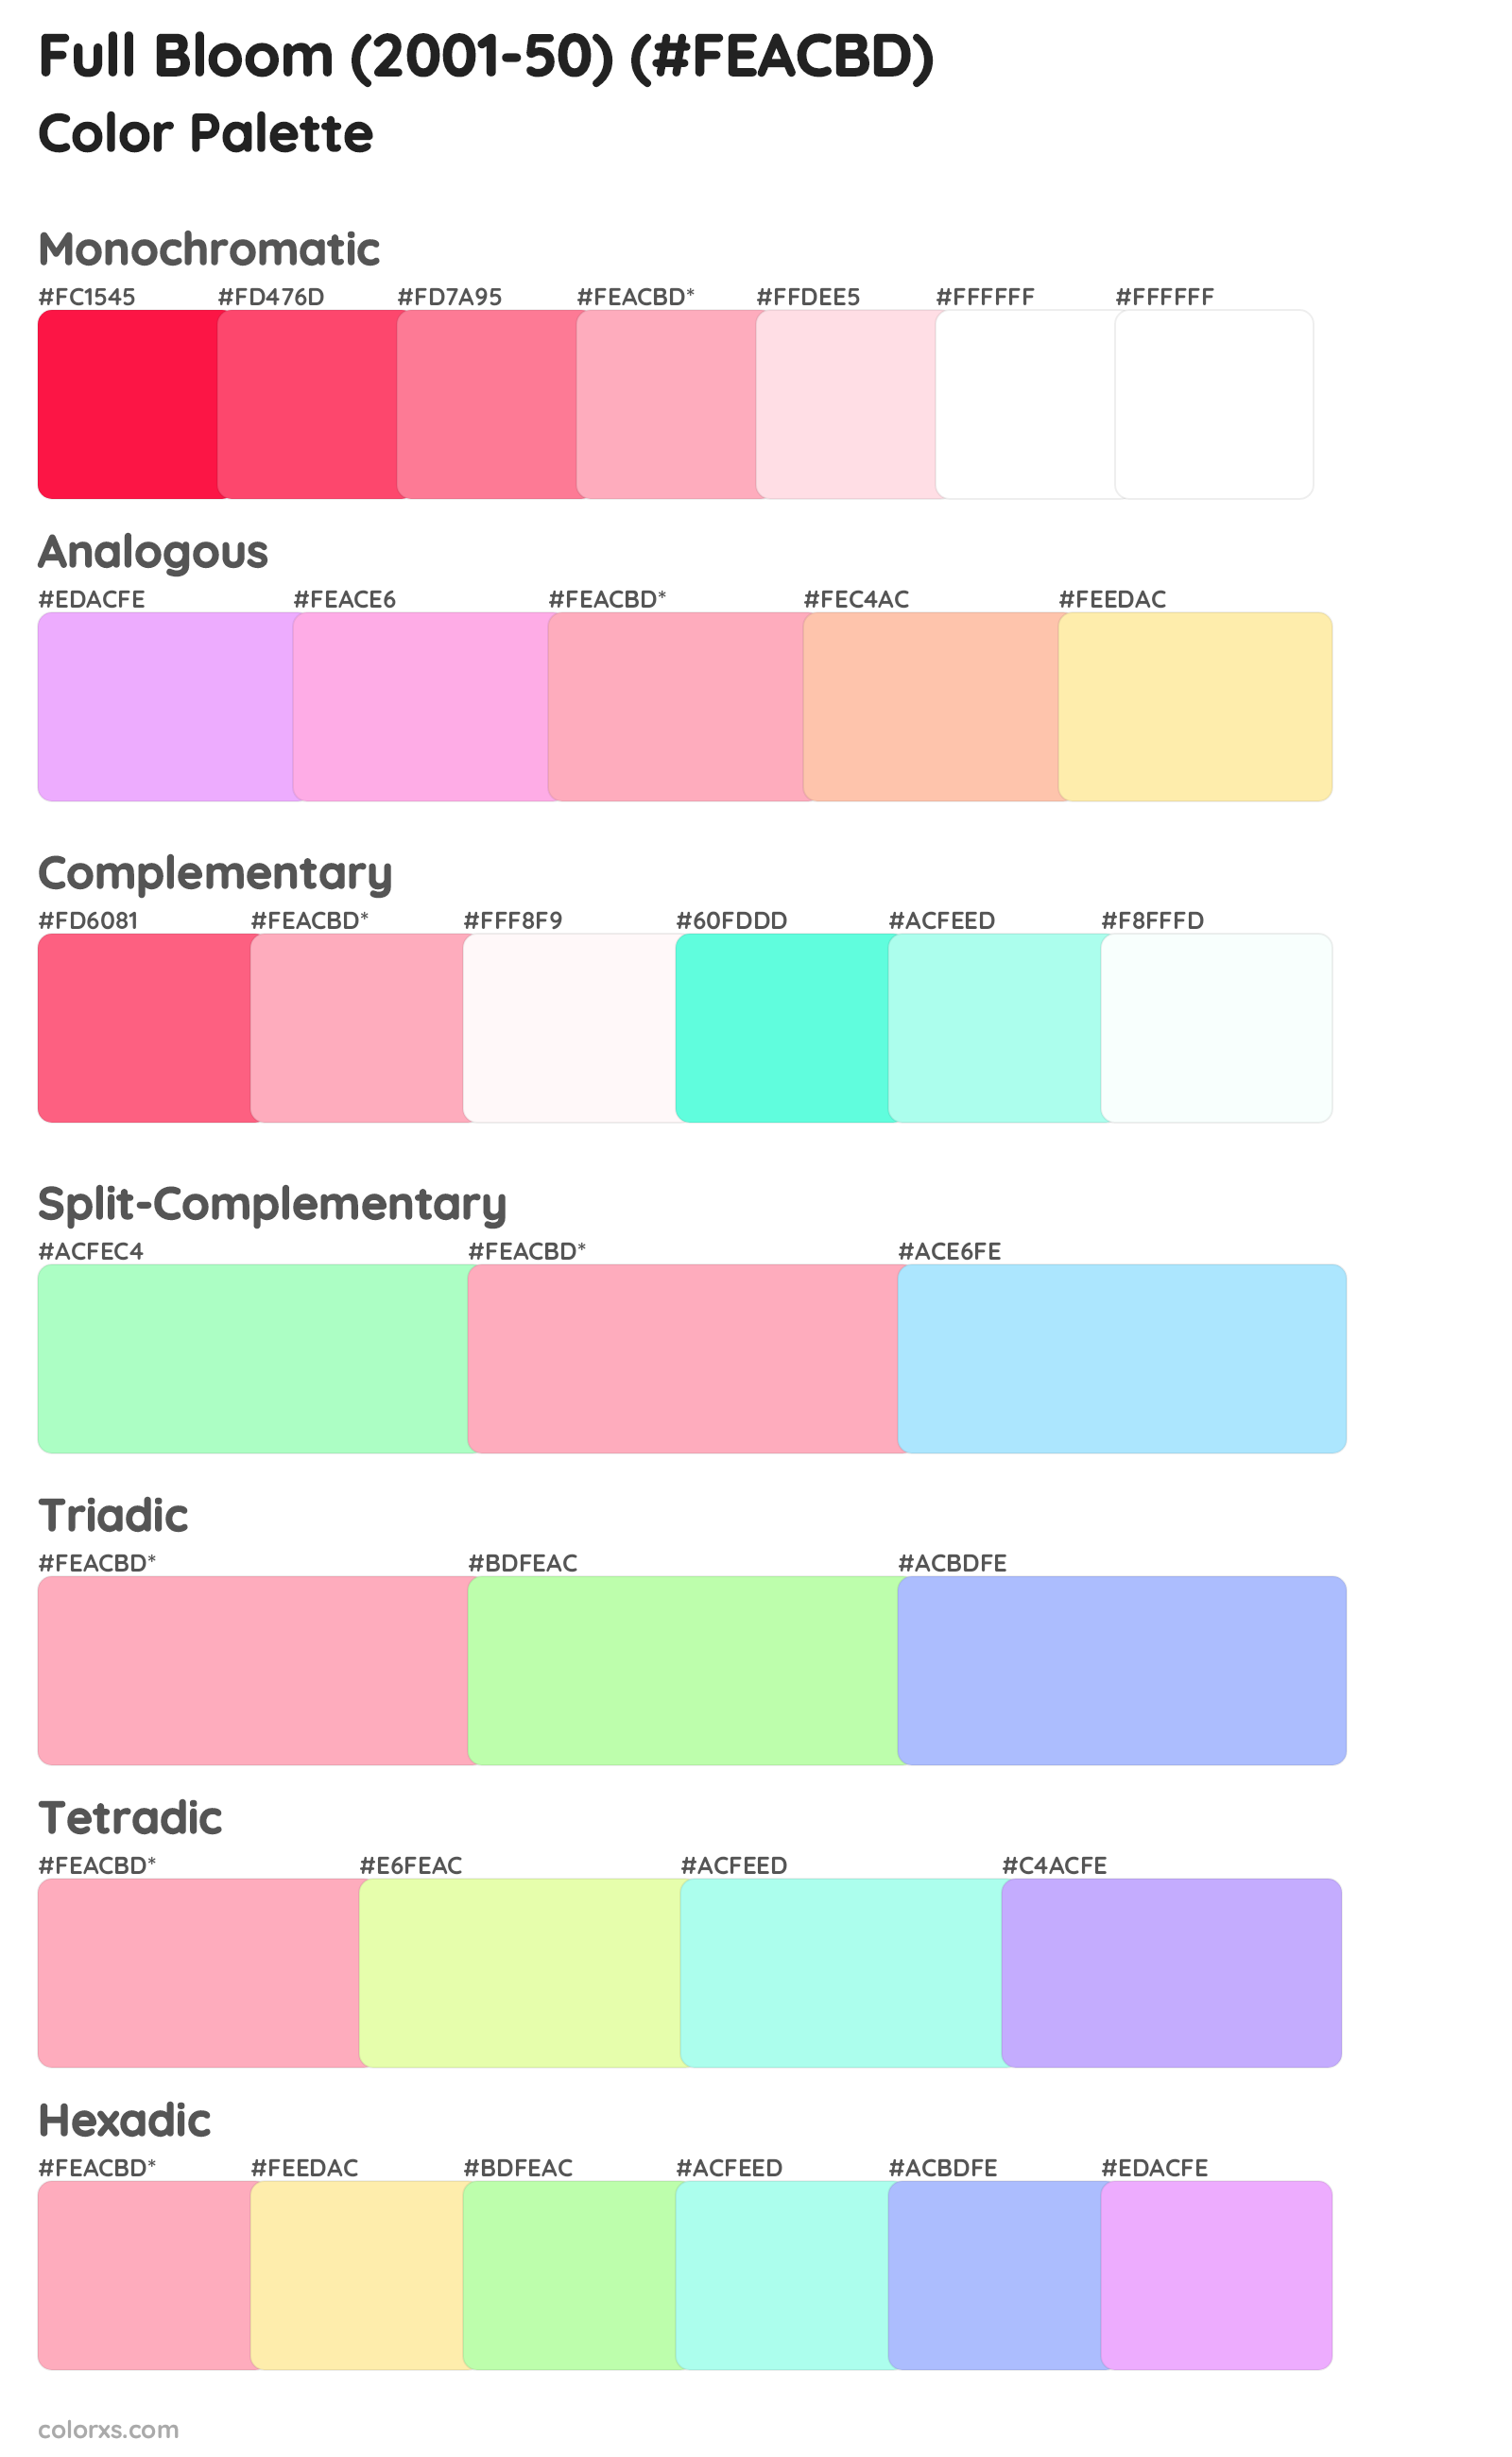 Full Bloom (2001-50) Color Scheme Palettes